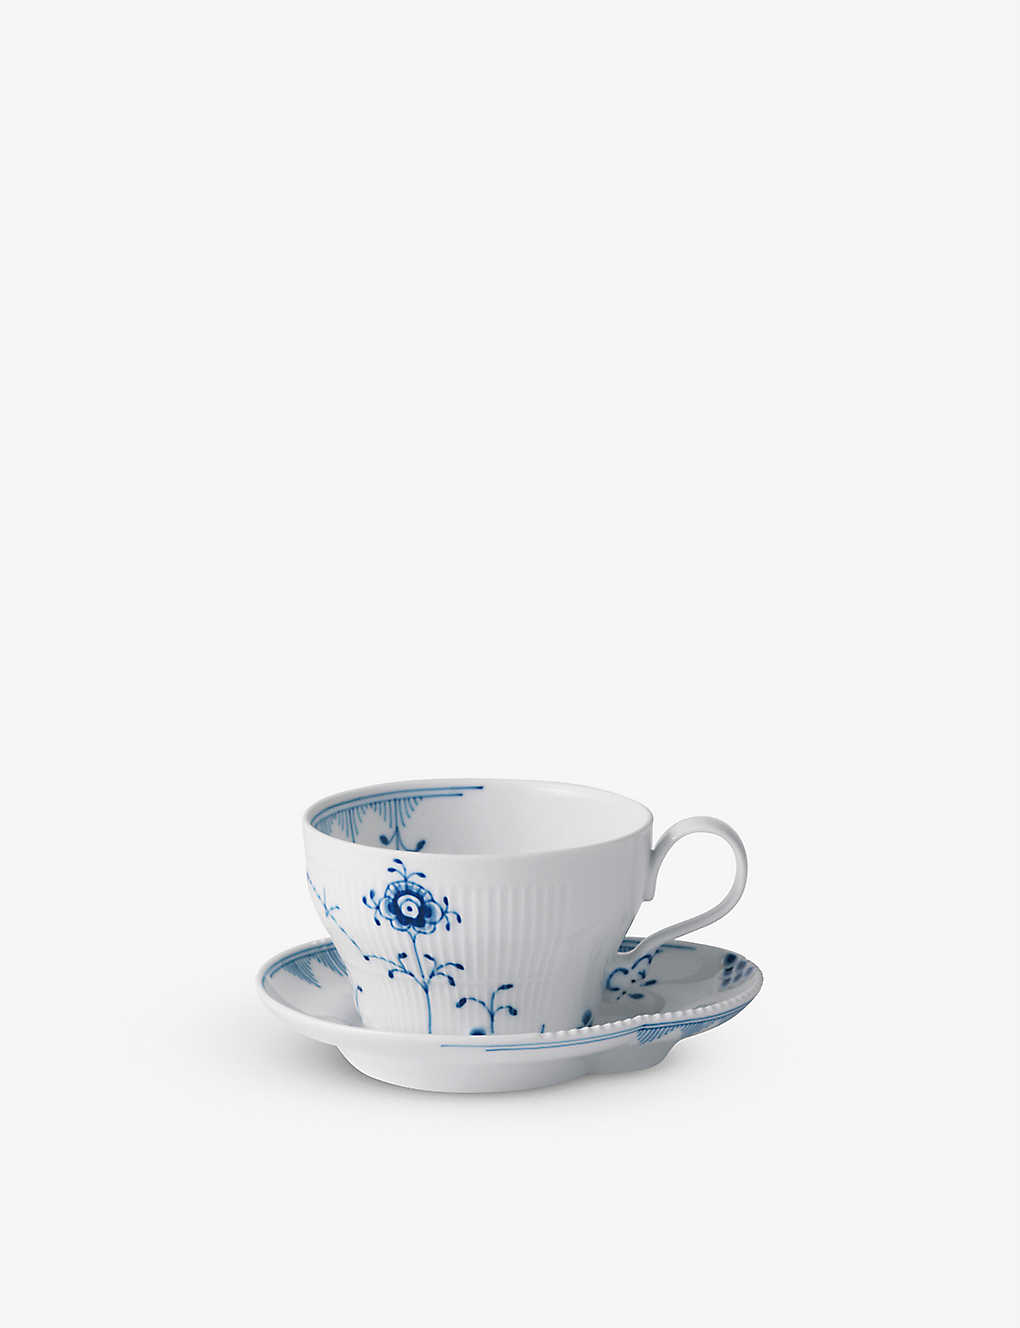 ROYAL COPENHAGEN ブルーエレメンツ 器カップソーサーセット 6.5cm Blue Elements porcelain cup and saucer set 6.5cm